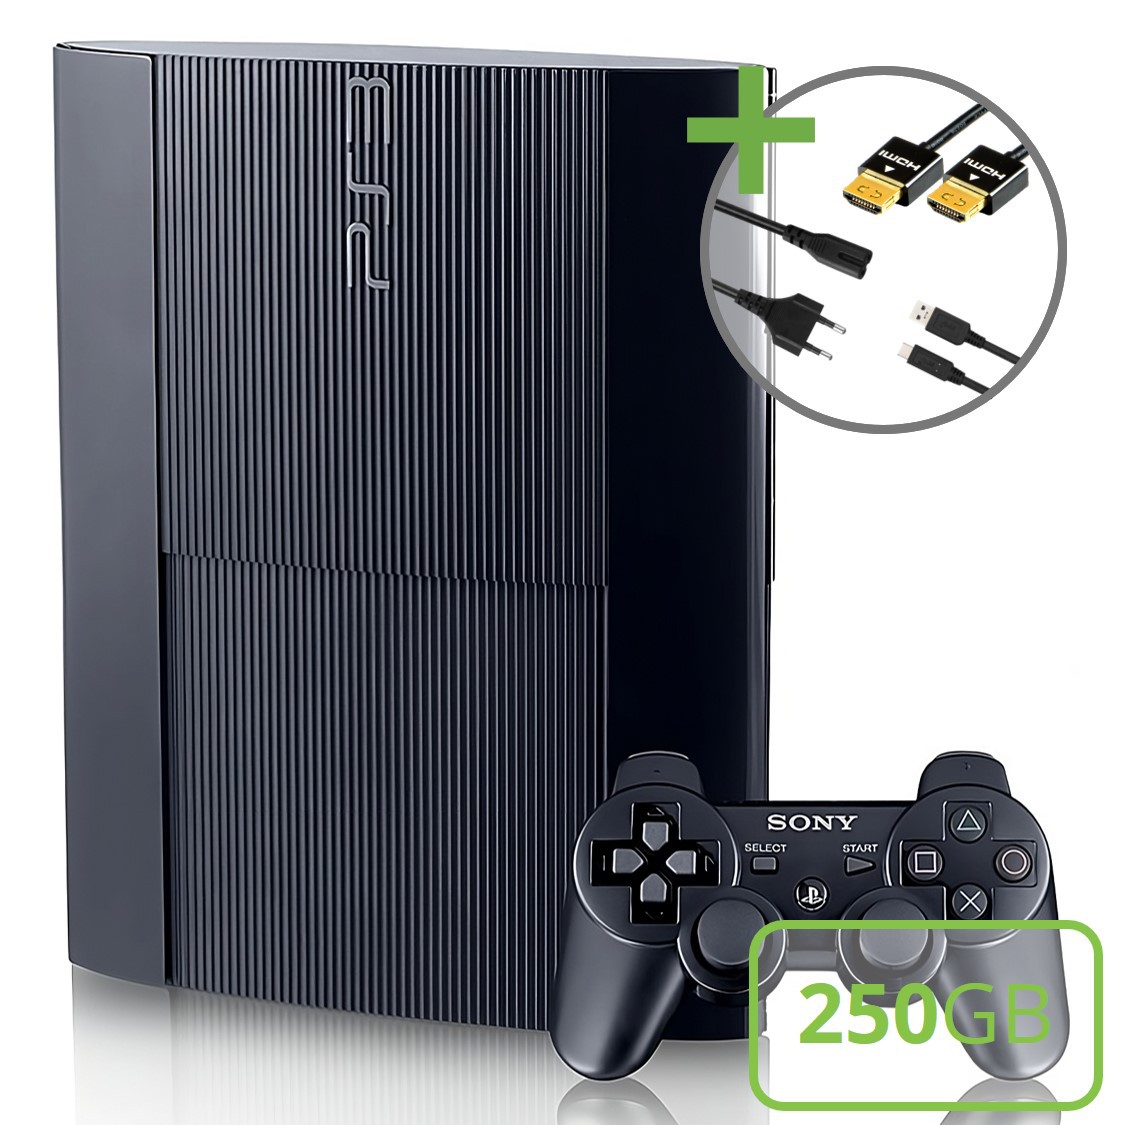 Sony PlayStation 3 Super Slim (250GB) Starter Pack - DualShock Edition - Playstation 3 Hardware - 2